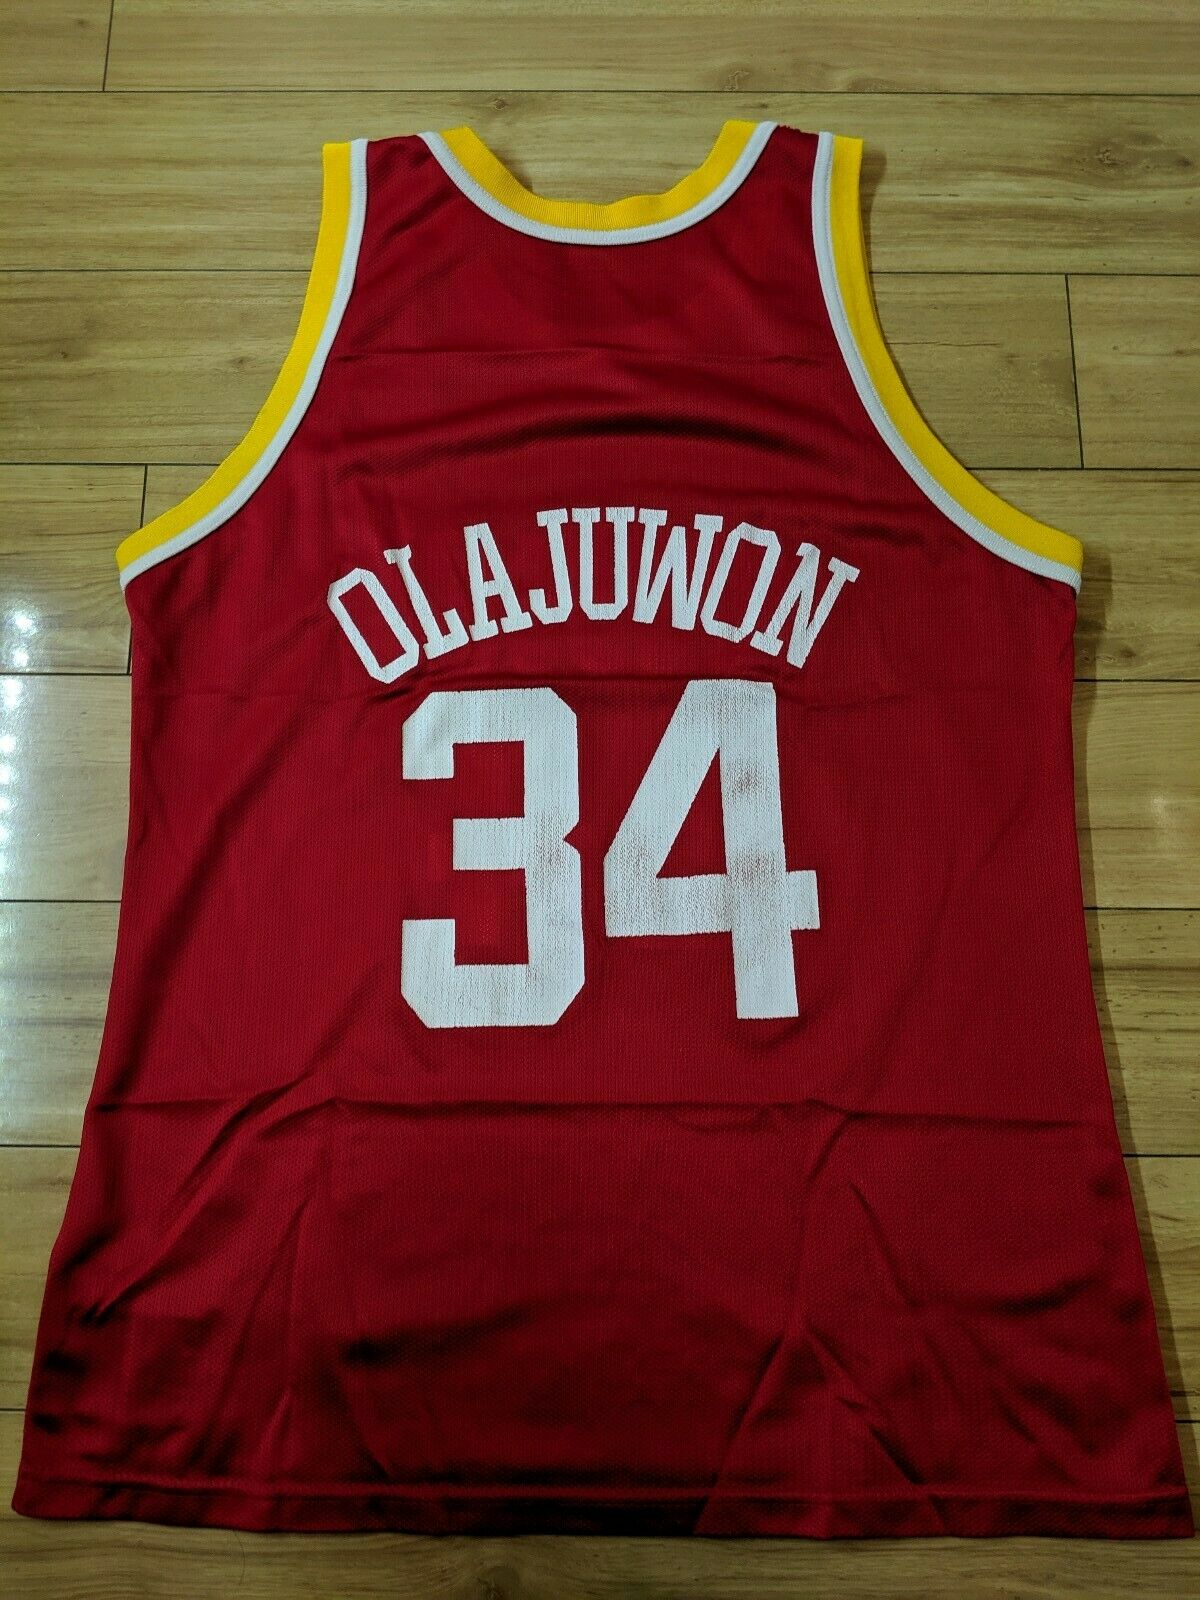 Vintage Houston Rockets Hakeem Olajuwon Locker T-shirt 90s NBA Basketball –  For All To Envy